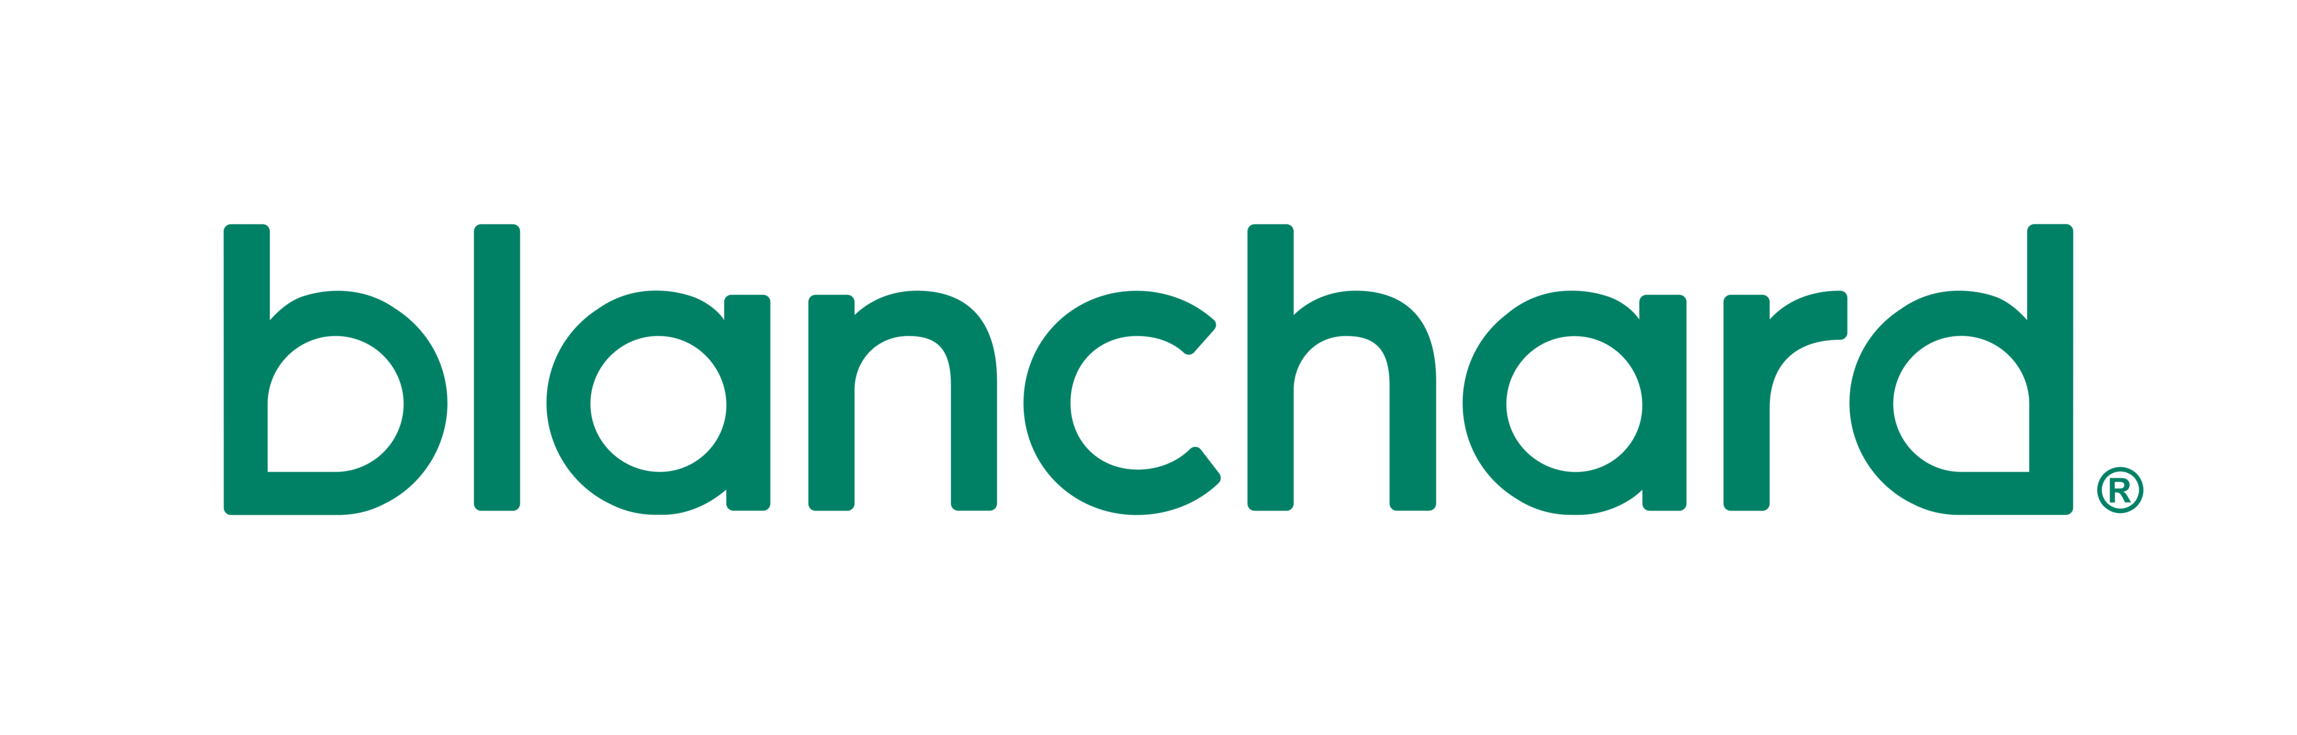 The Ken Blanchard Companies logo